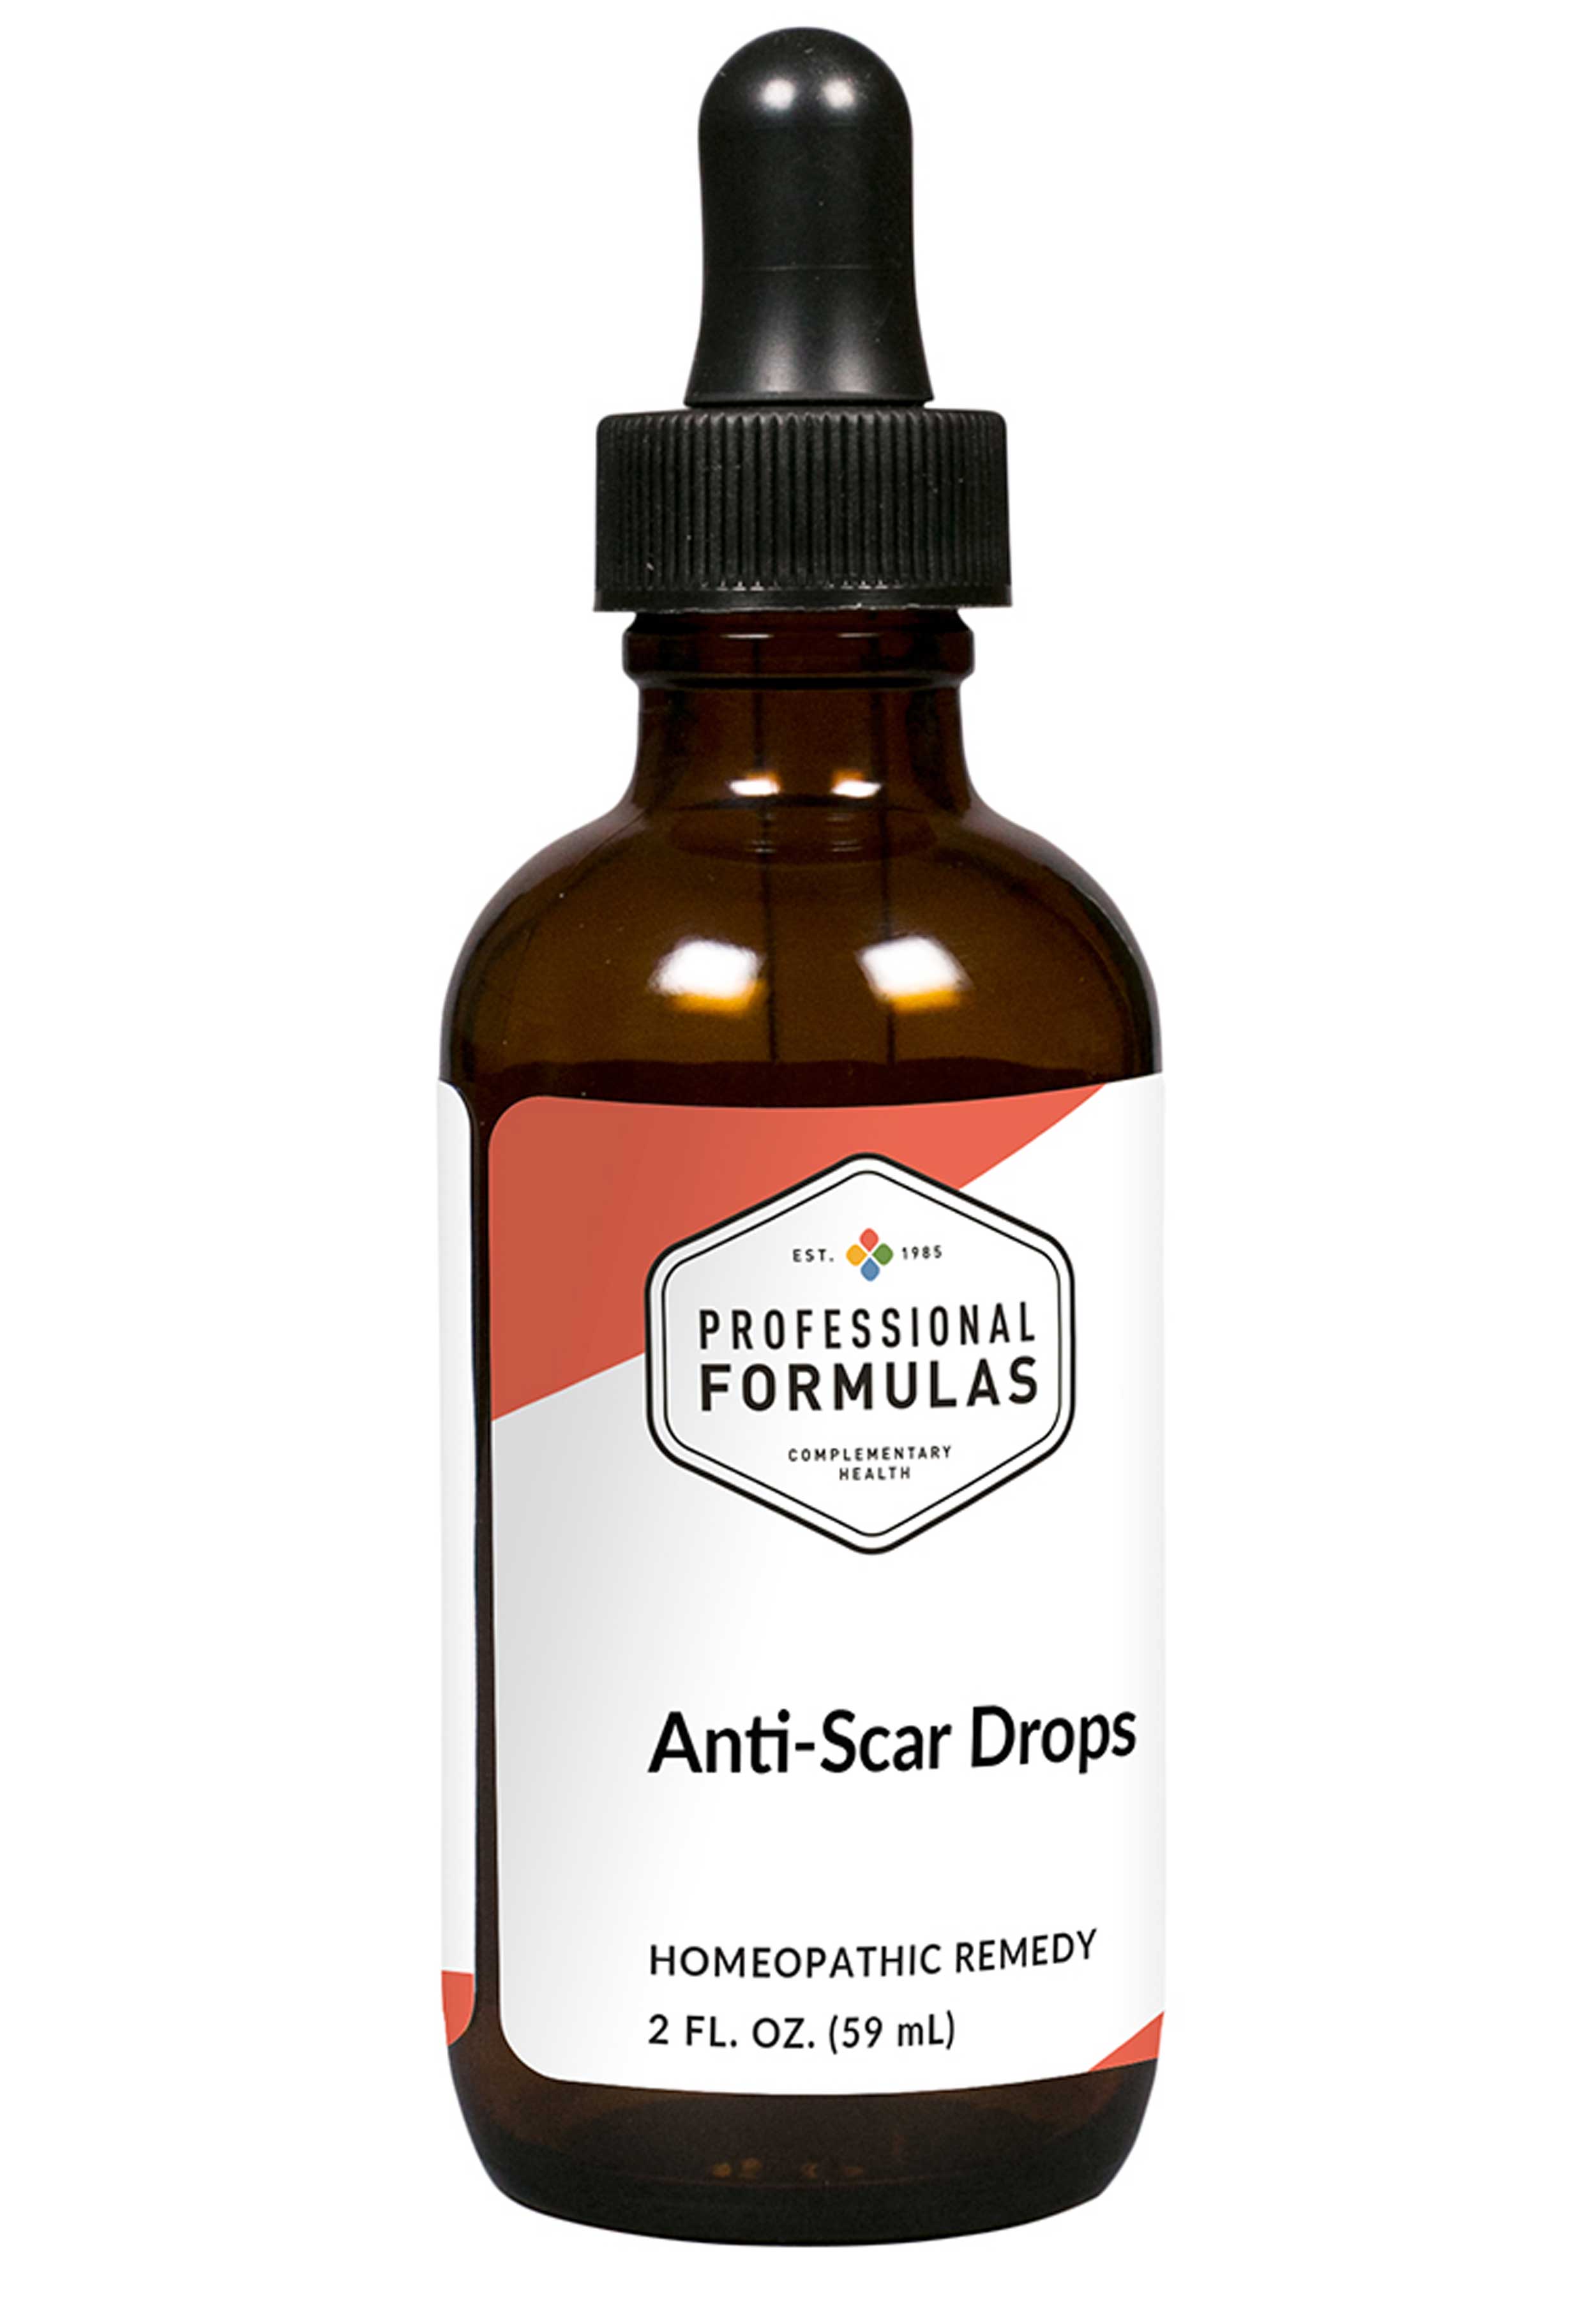 Professional Formulas Anti-Scar Drops